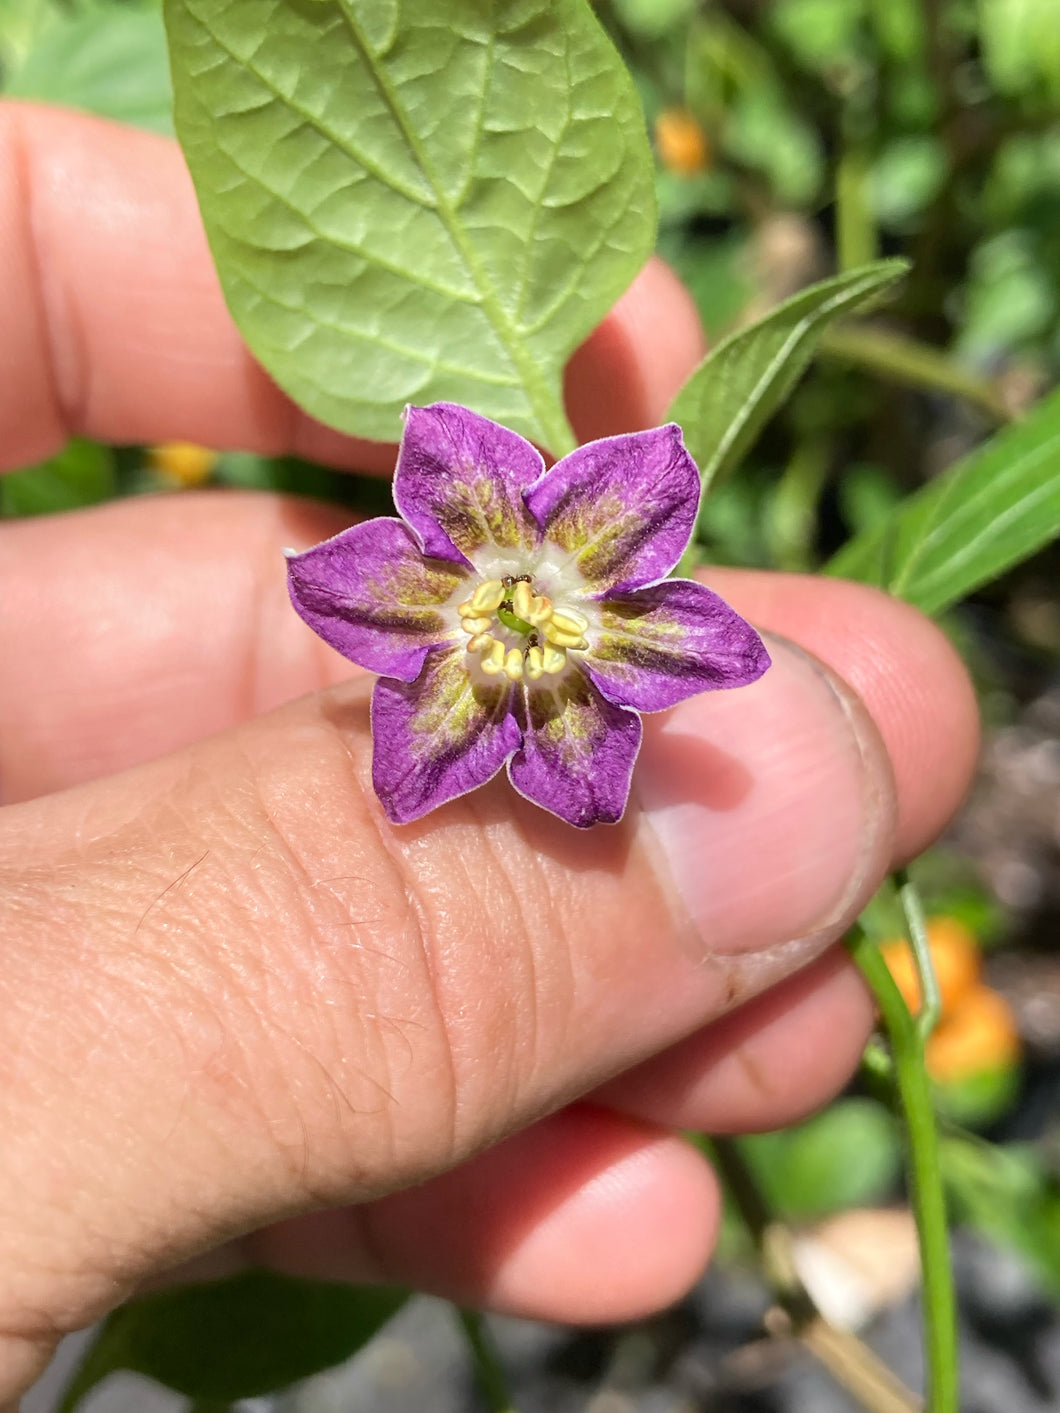 Aji Santa Cruz x Purple Flower Baccatum (Pepper Seeds)